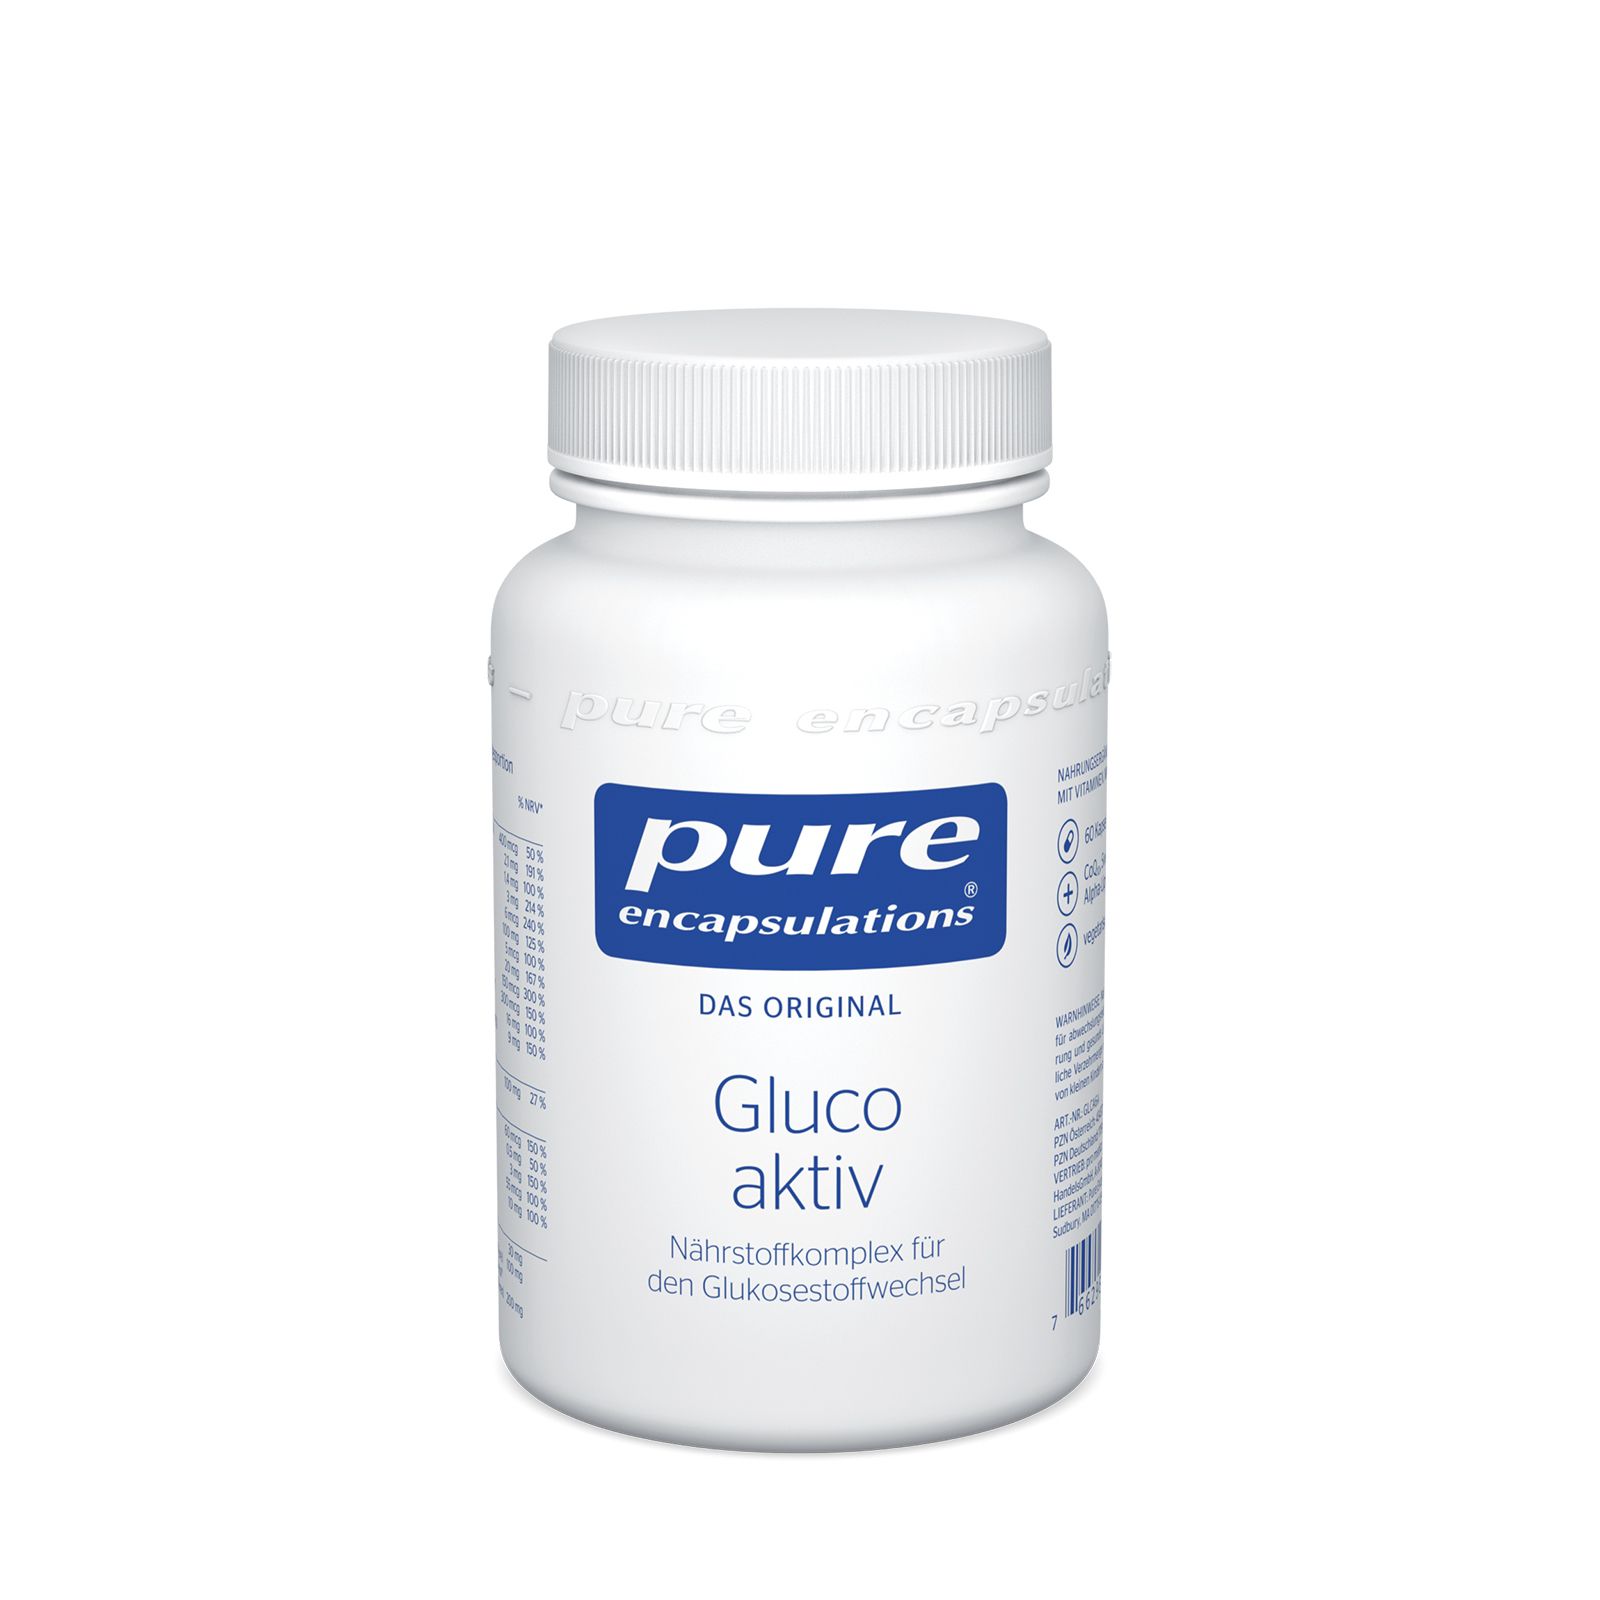 Pure Encapsulations® Gluco active